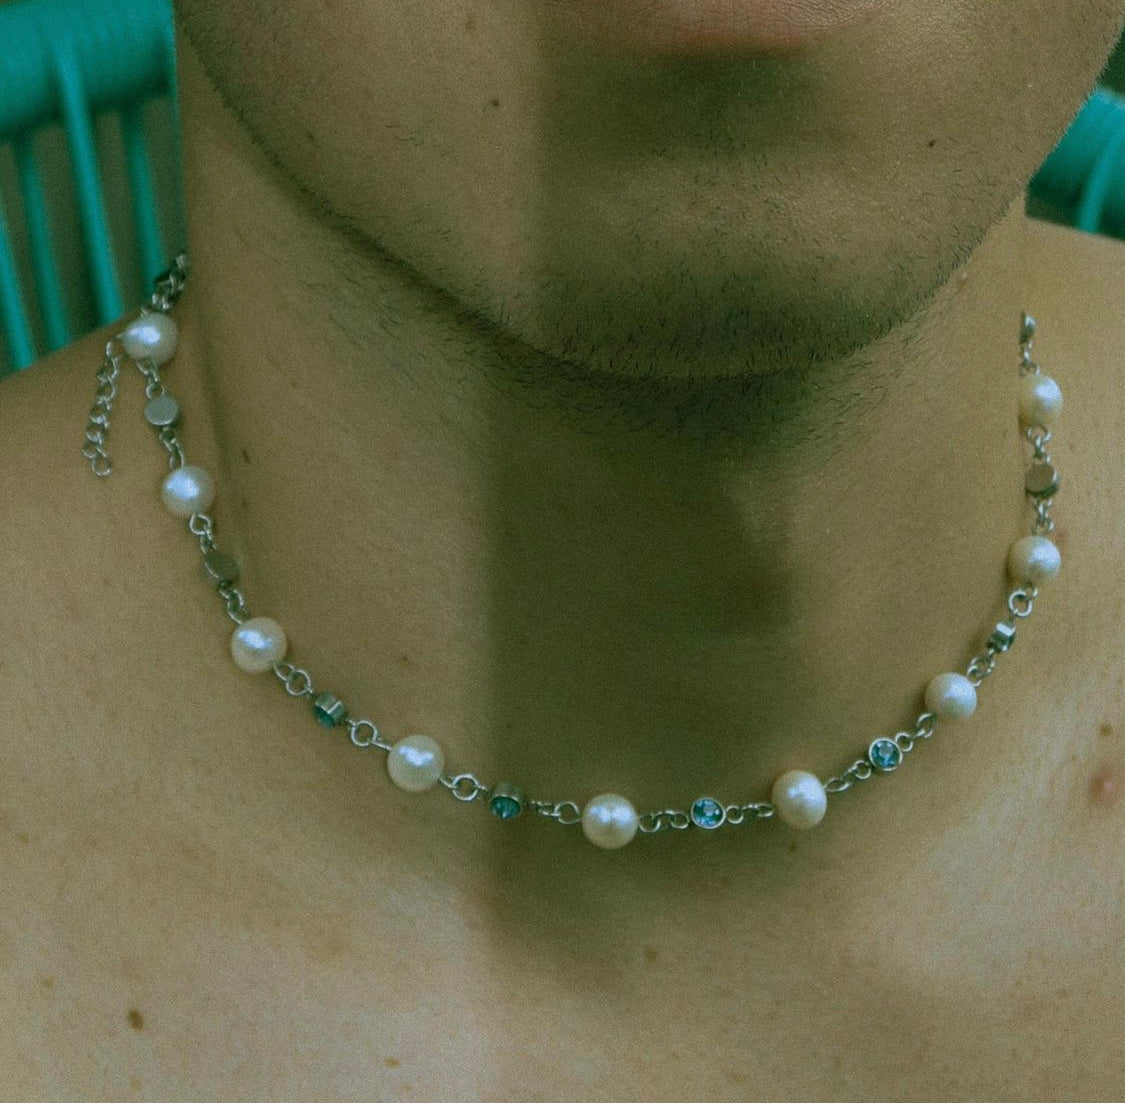 Jeweled Pearl Necklace - Fashion Jewelry by Yordy.